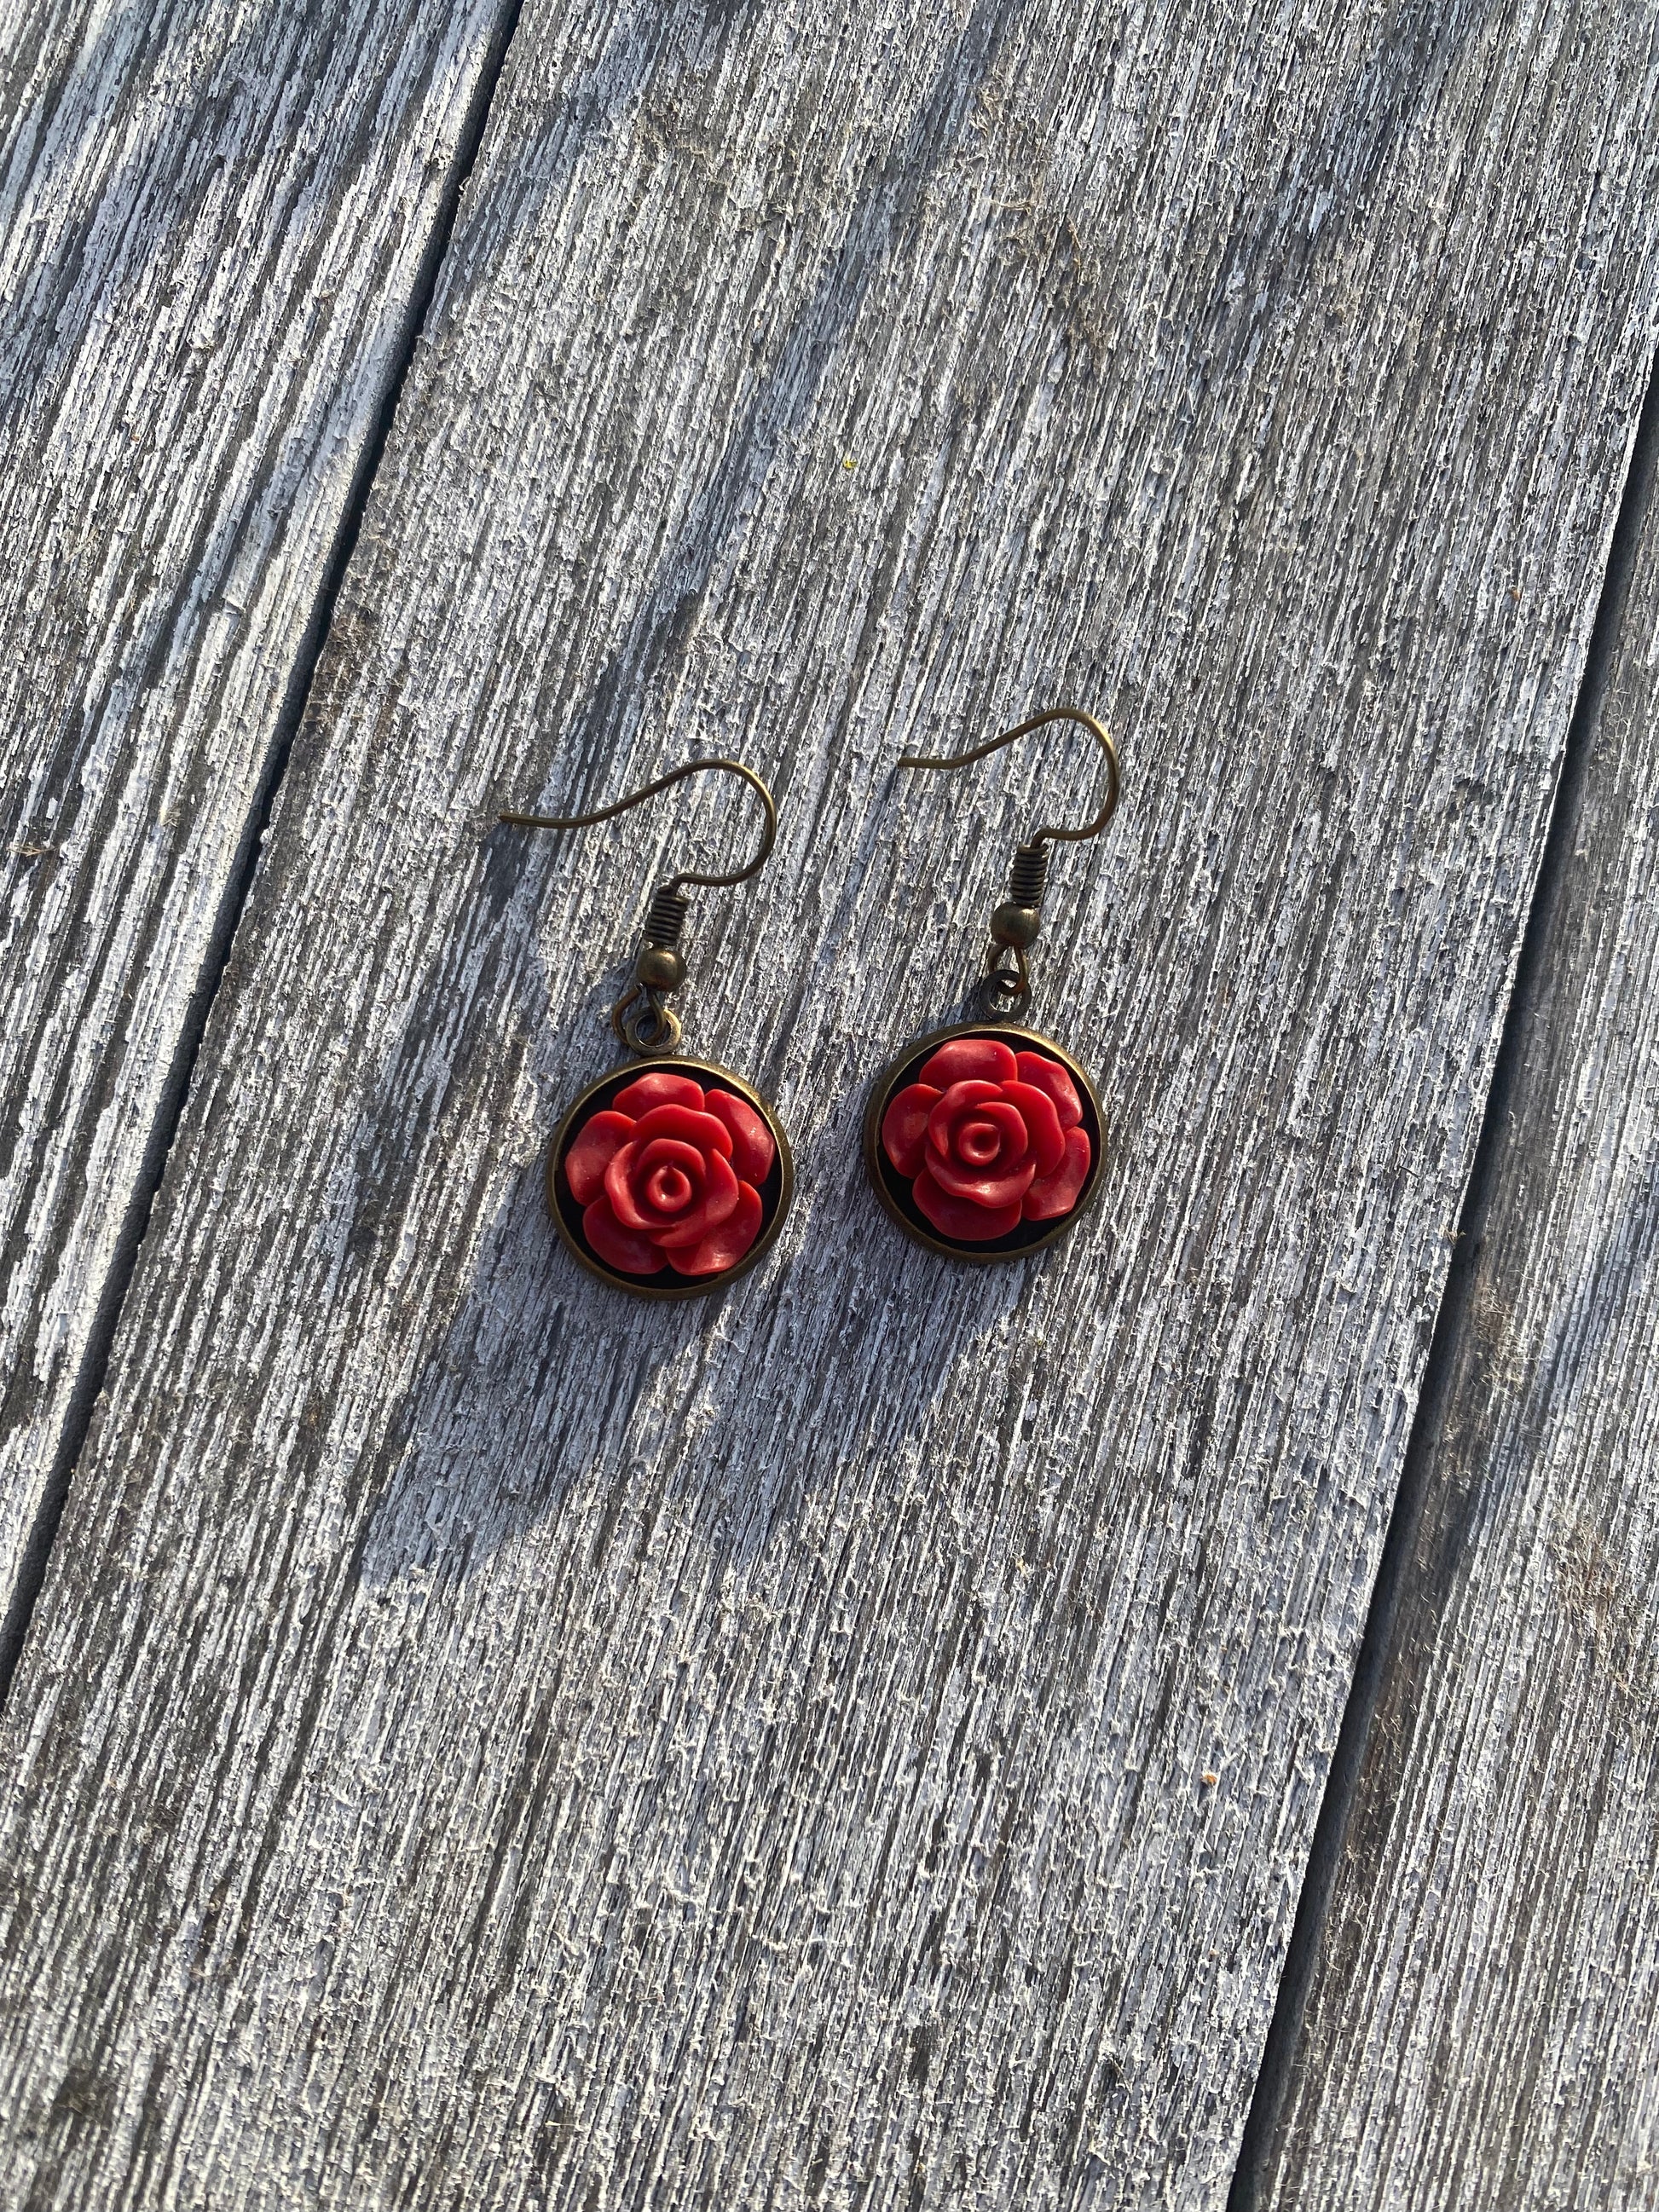 Framed Red Rose Dangle Earring Jewelry Gift 